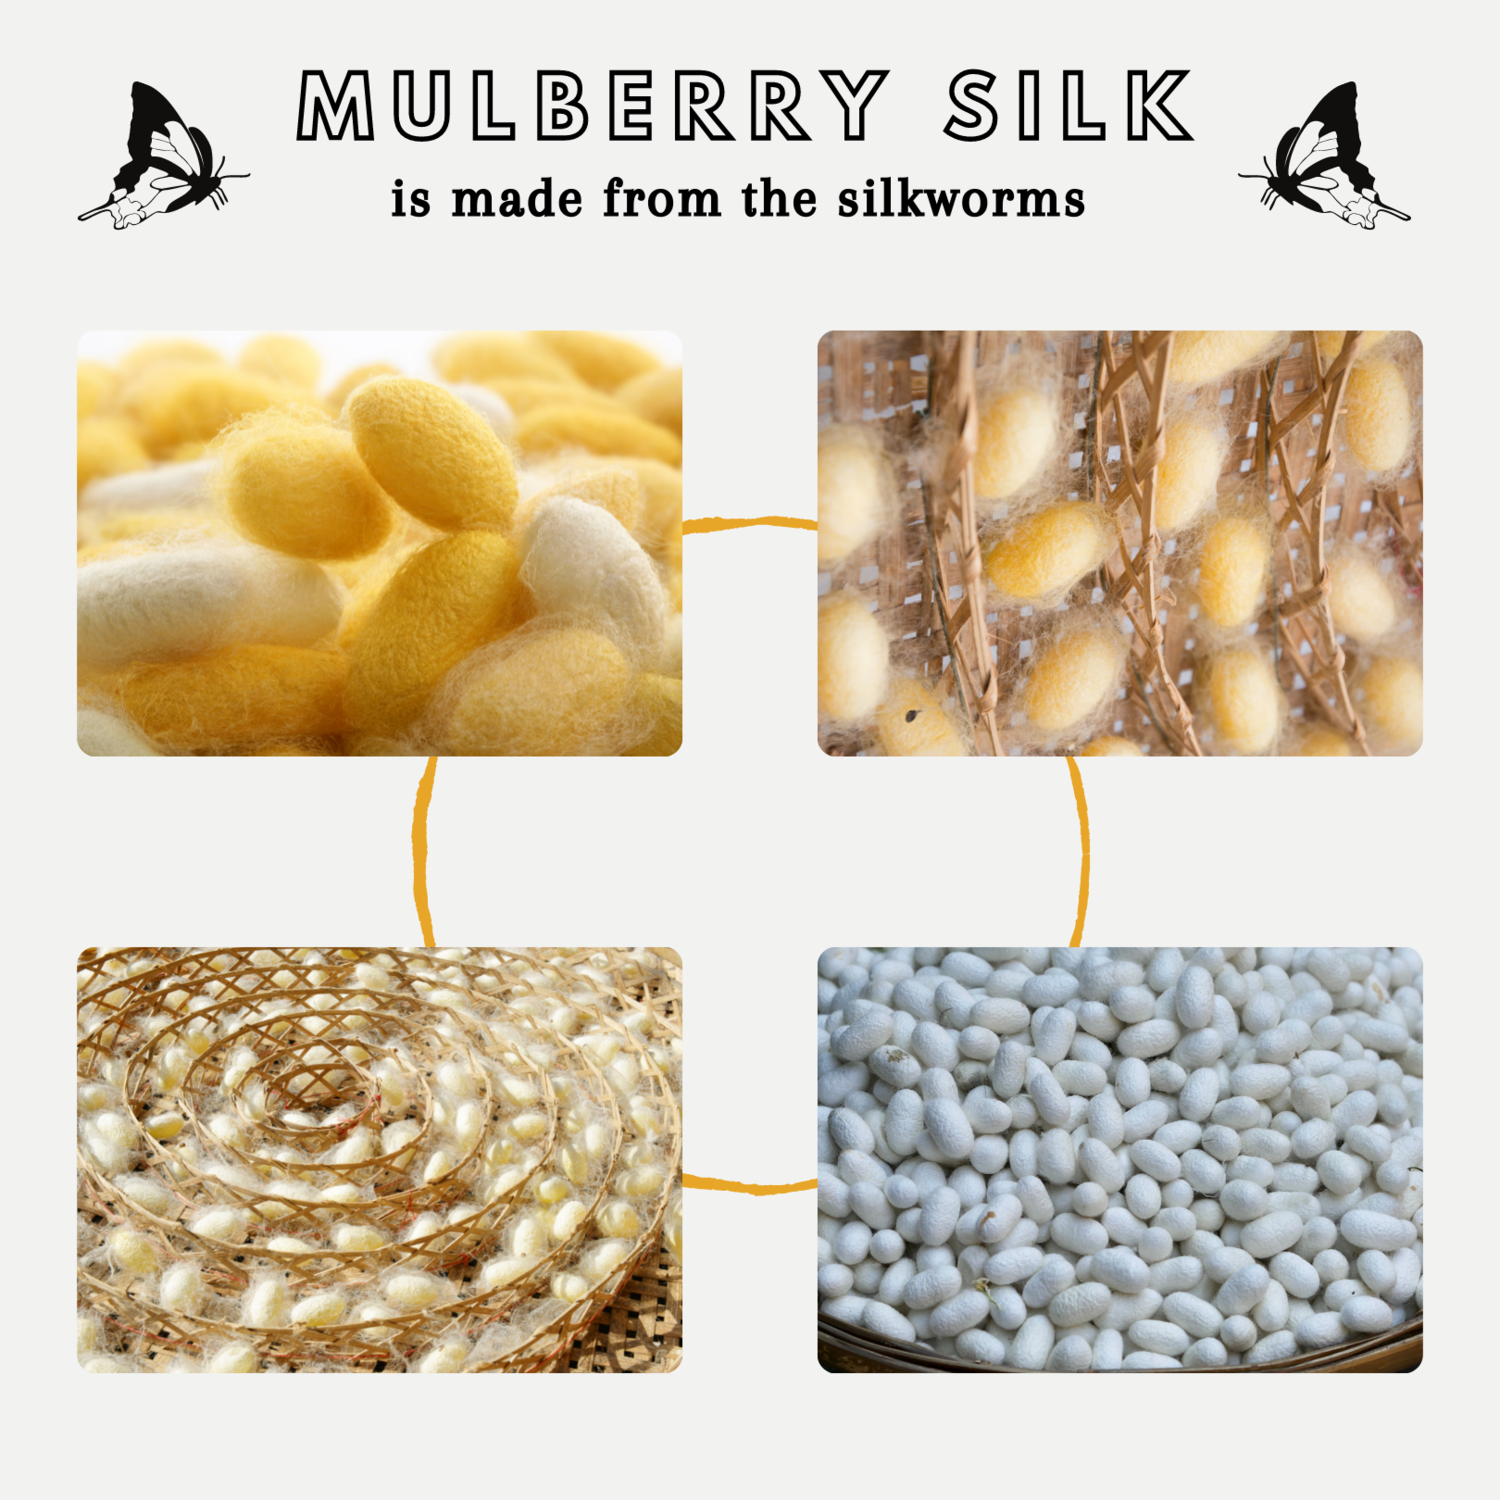 Red 100% Pure Mulberry Silk Charmeuse Fabric, 19mm 44 Width Pre-Cut Silk  Fabric — NOCHKA